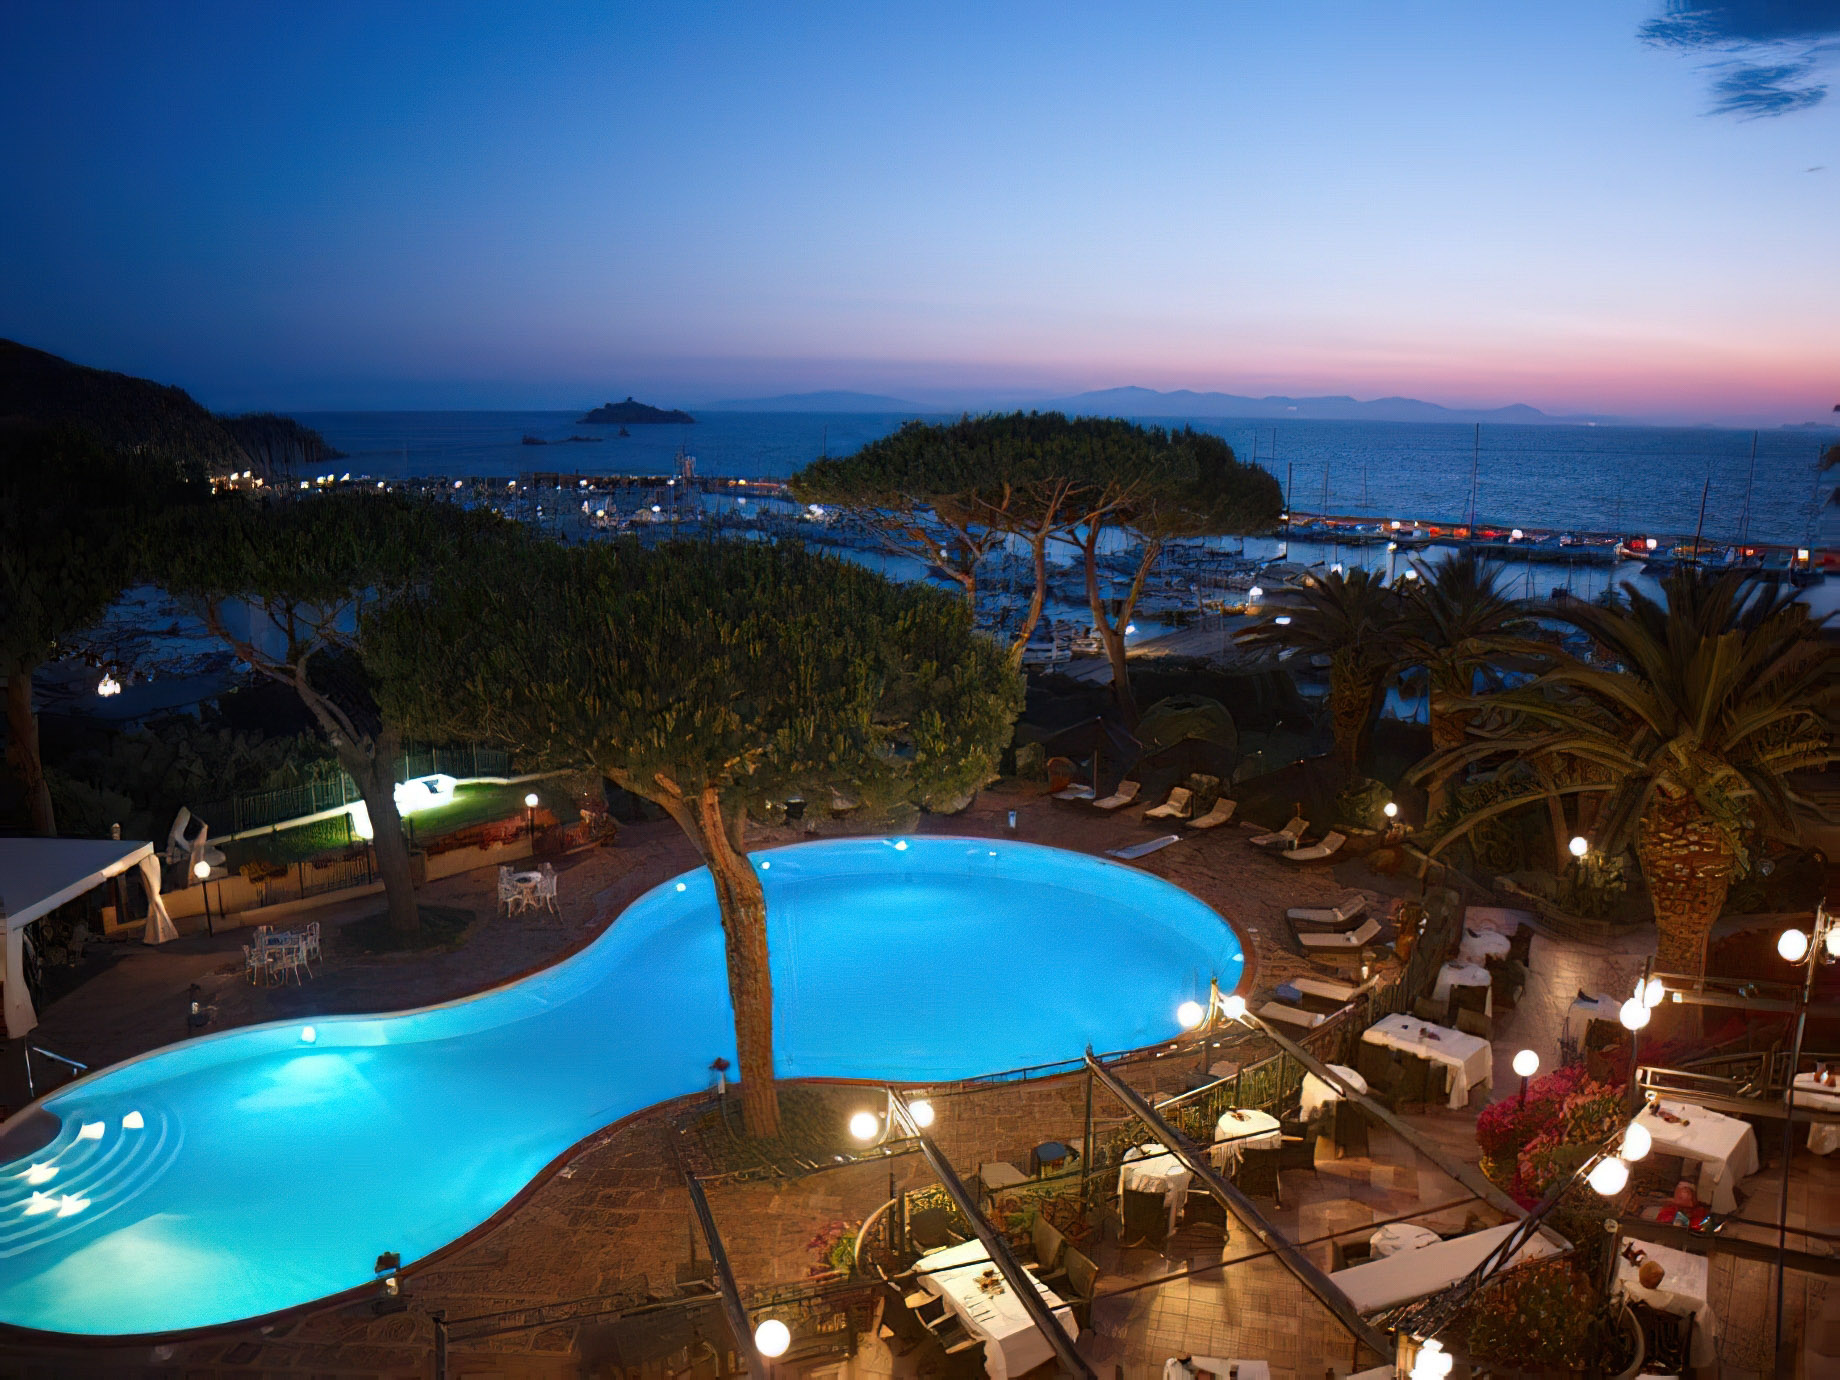 Baglioni Resort Cala del Porto Tuscany – Punta Ala, Italy – Pool Night View